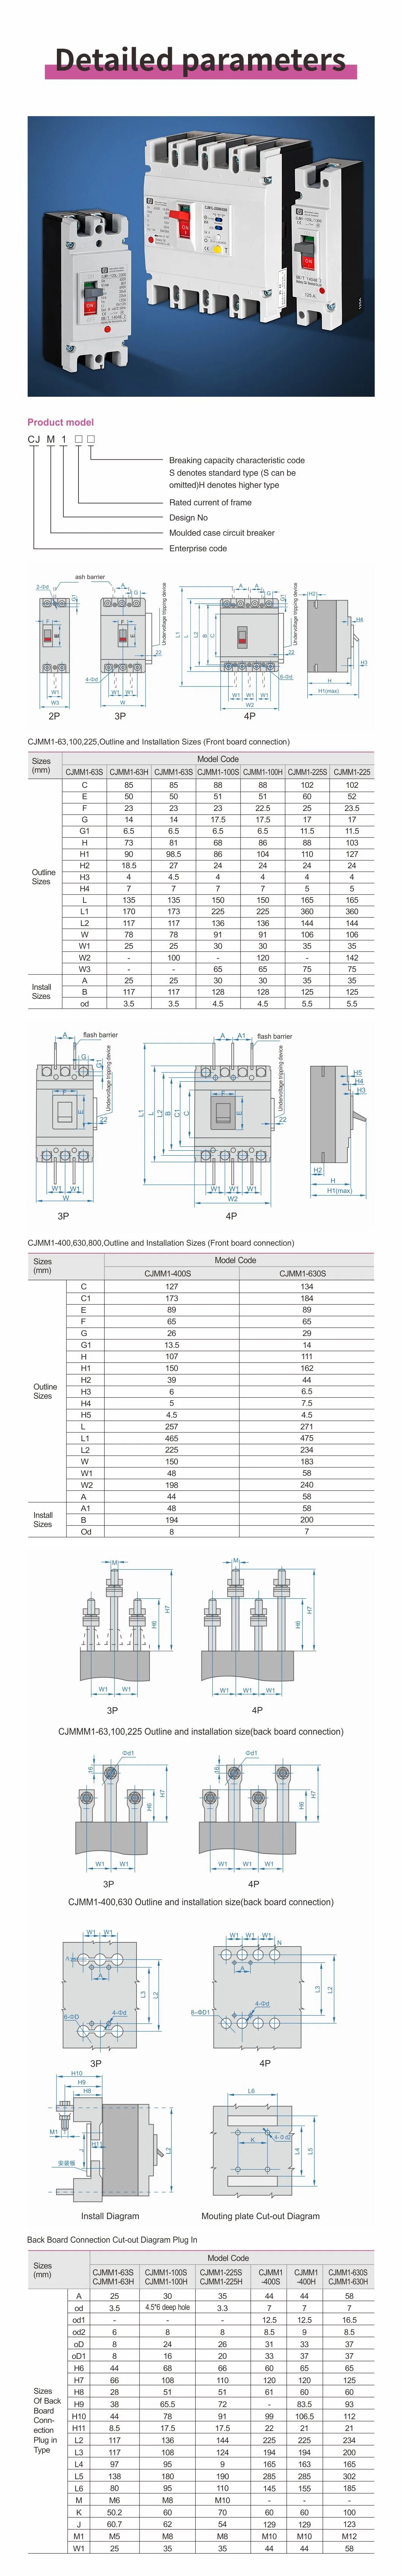 MCCB Cjm3-400 3p Compact DIN Rail Molded Case Circuit Breaker